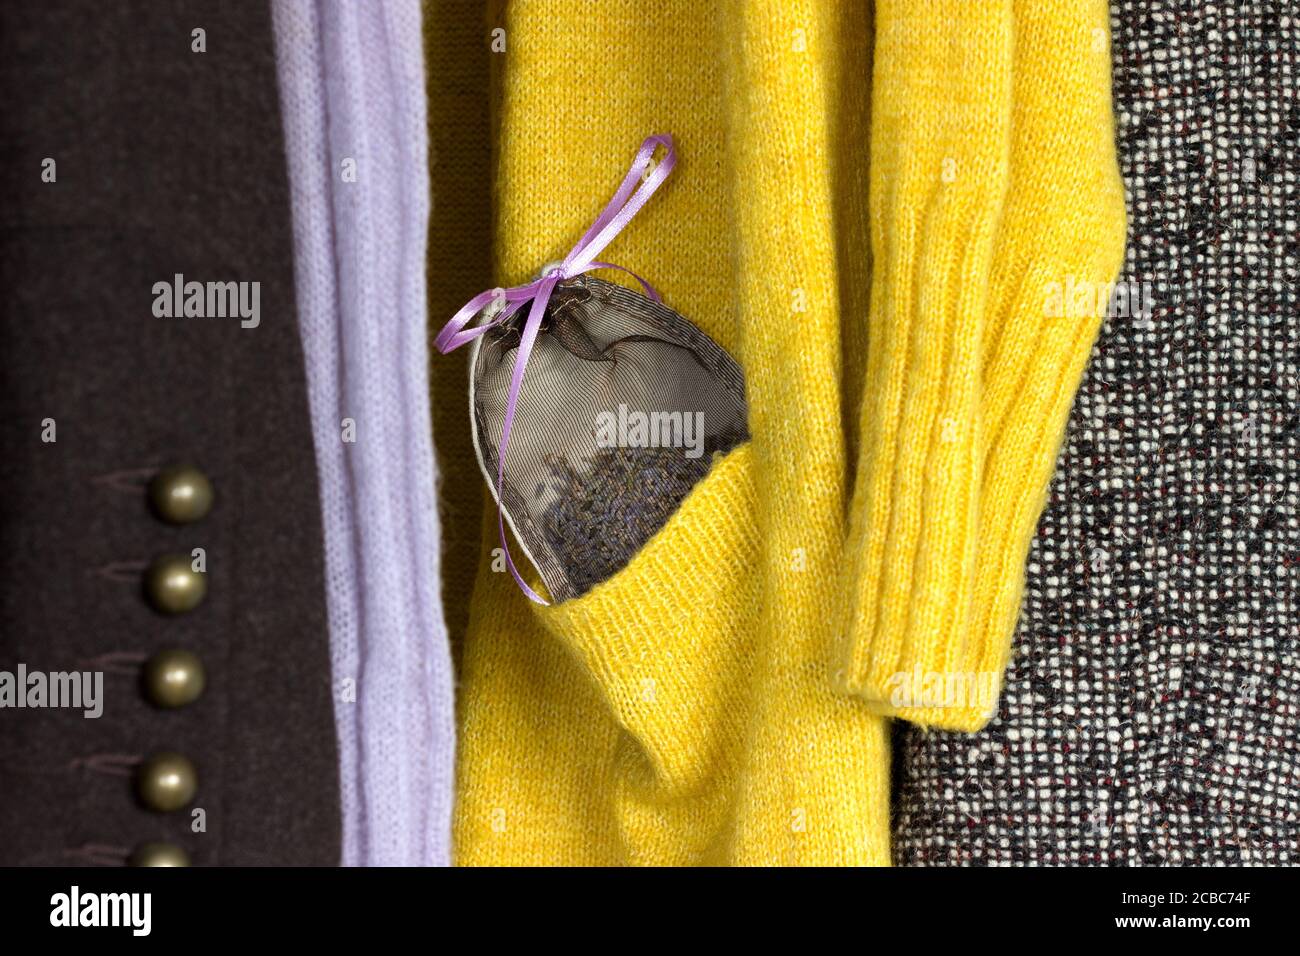 Lavender sachet in a woolen jacket pocket in a closet, moth